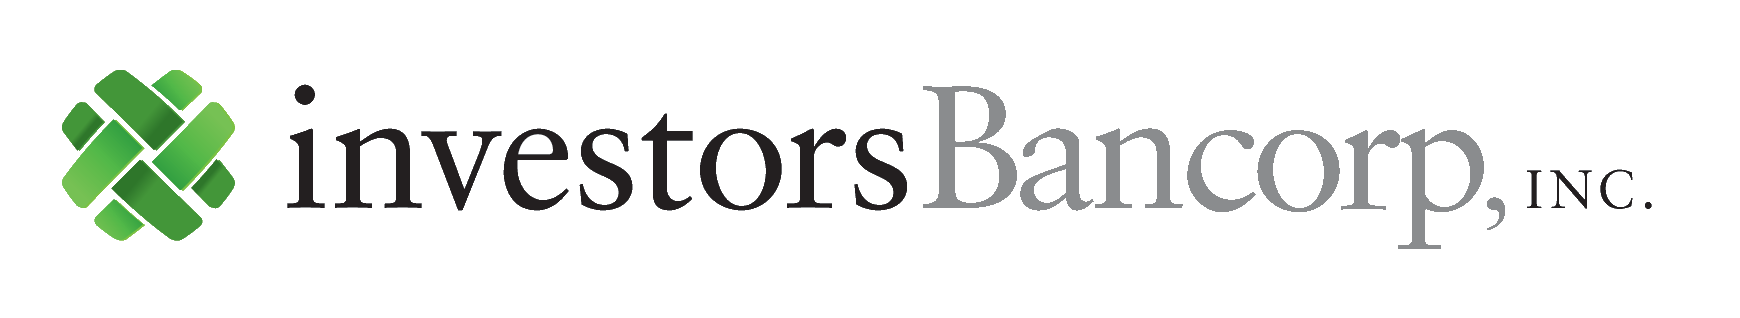 Investors Bancorp, Inc.